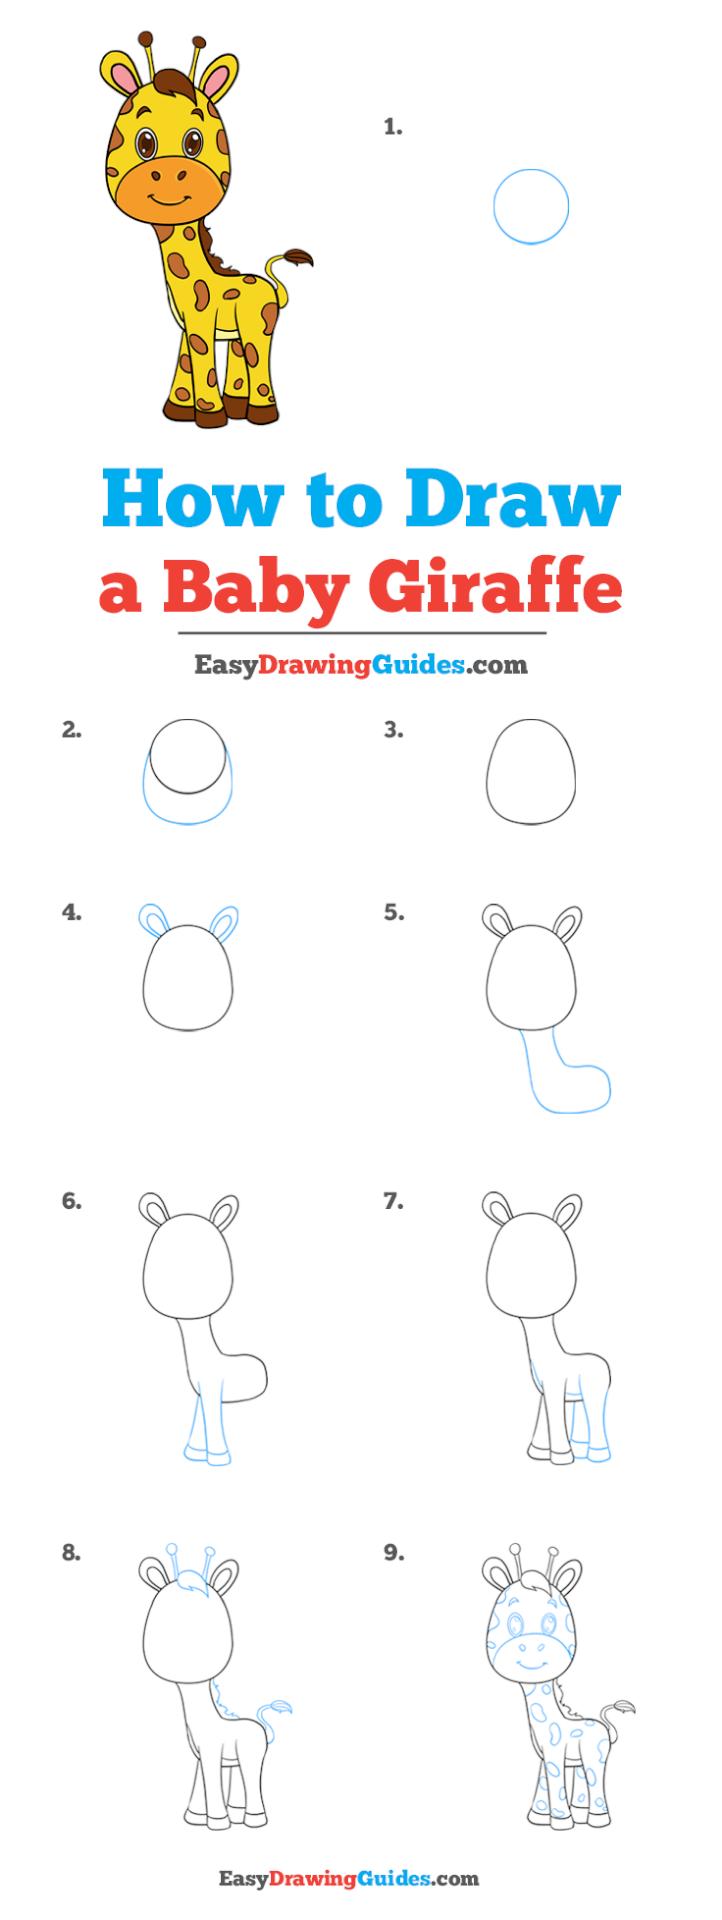 Easy Giraffe Drawing Tutorial - Learn How to Draw a Giraffe Easily